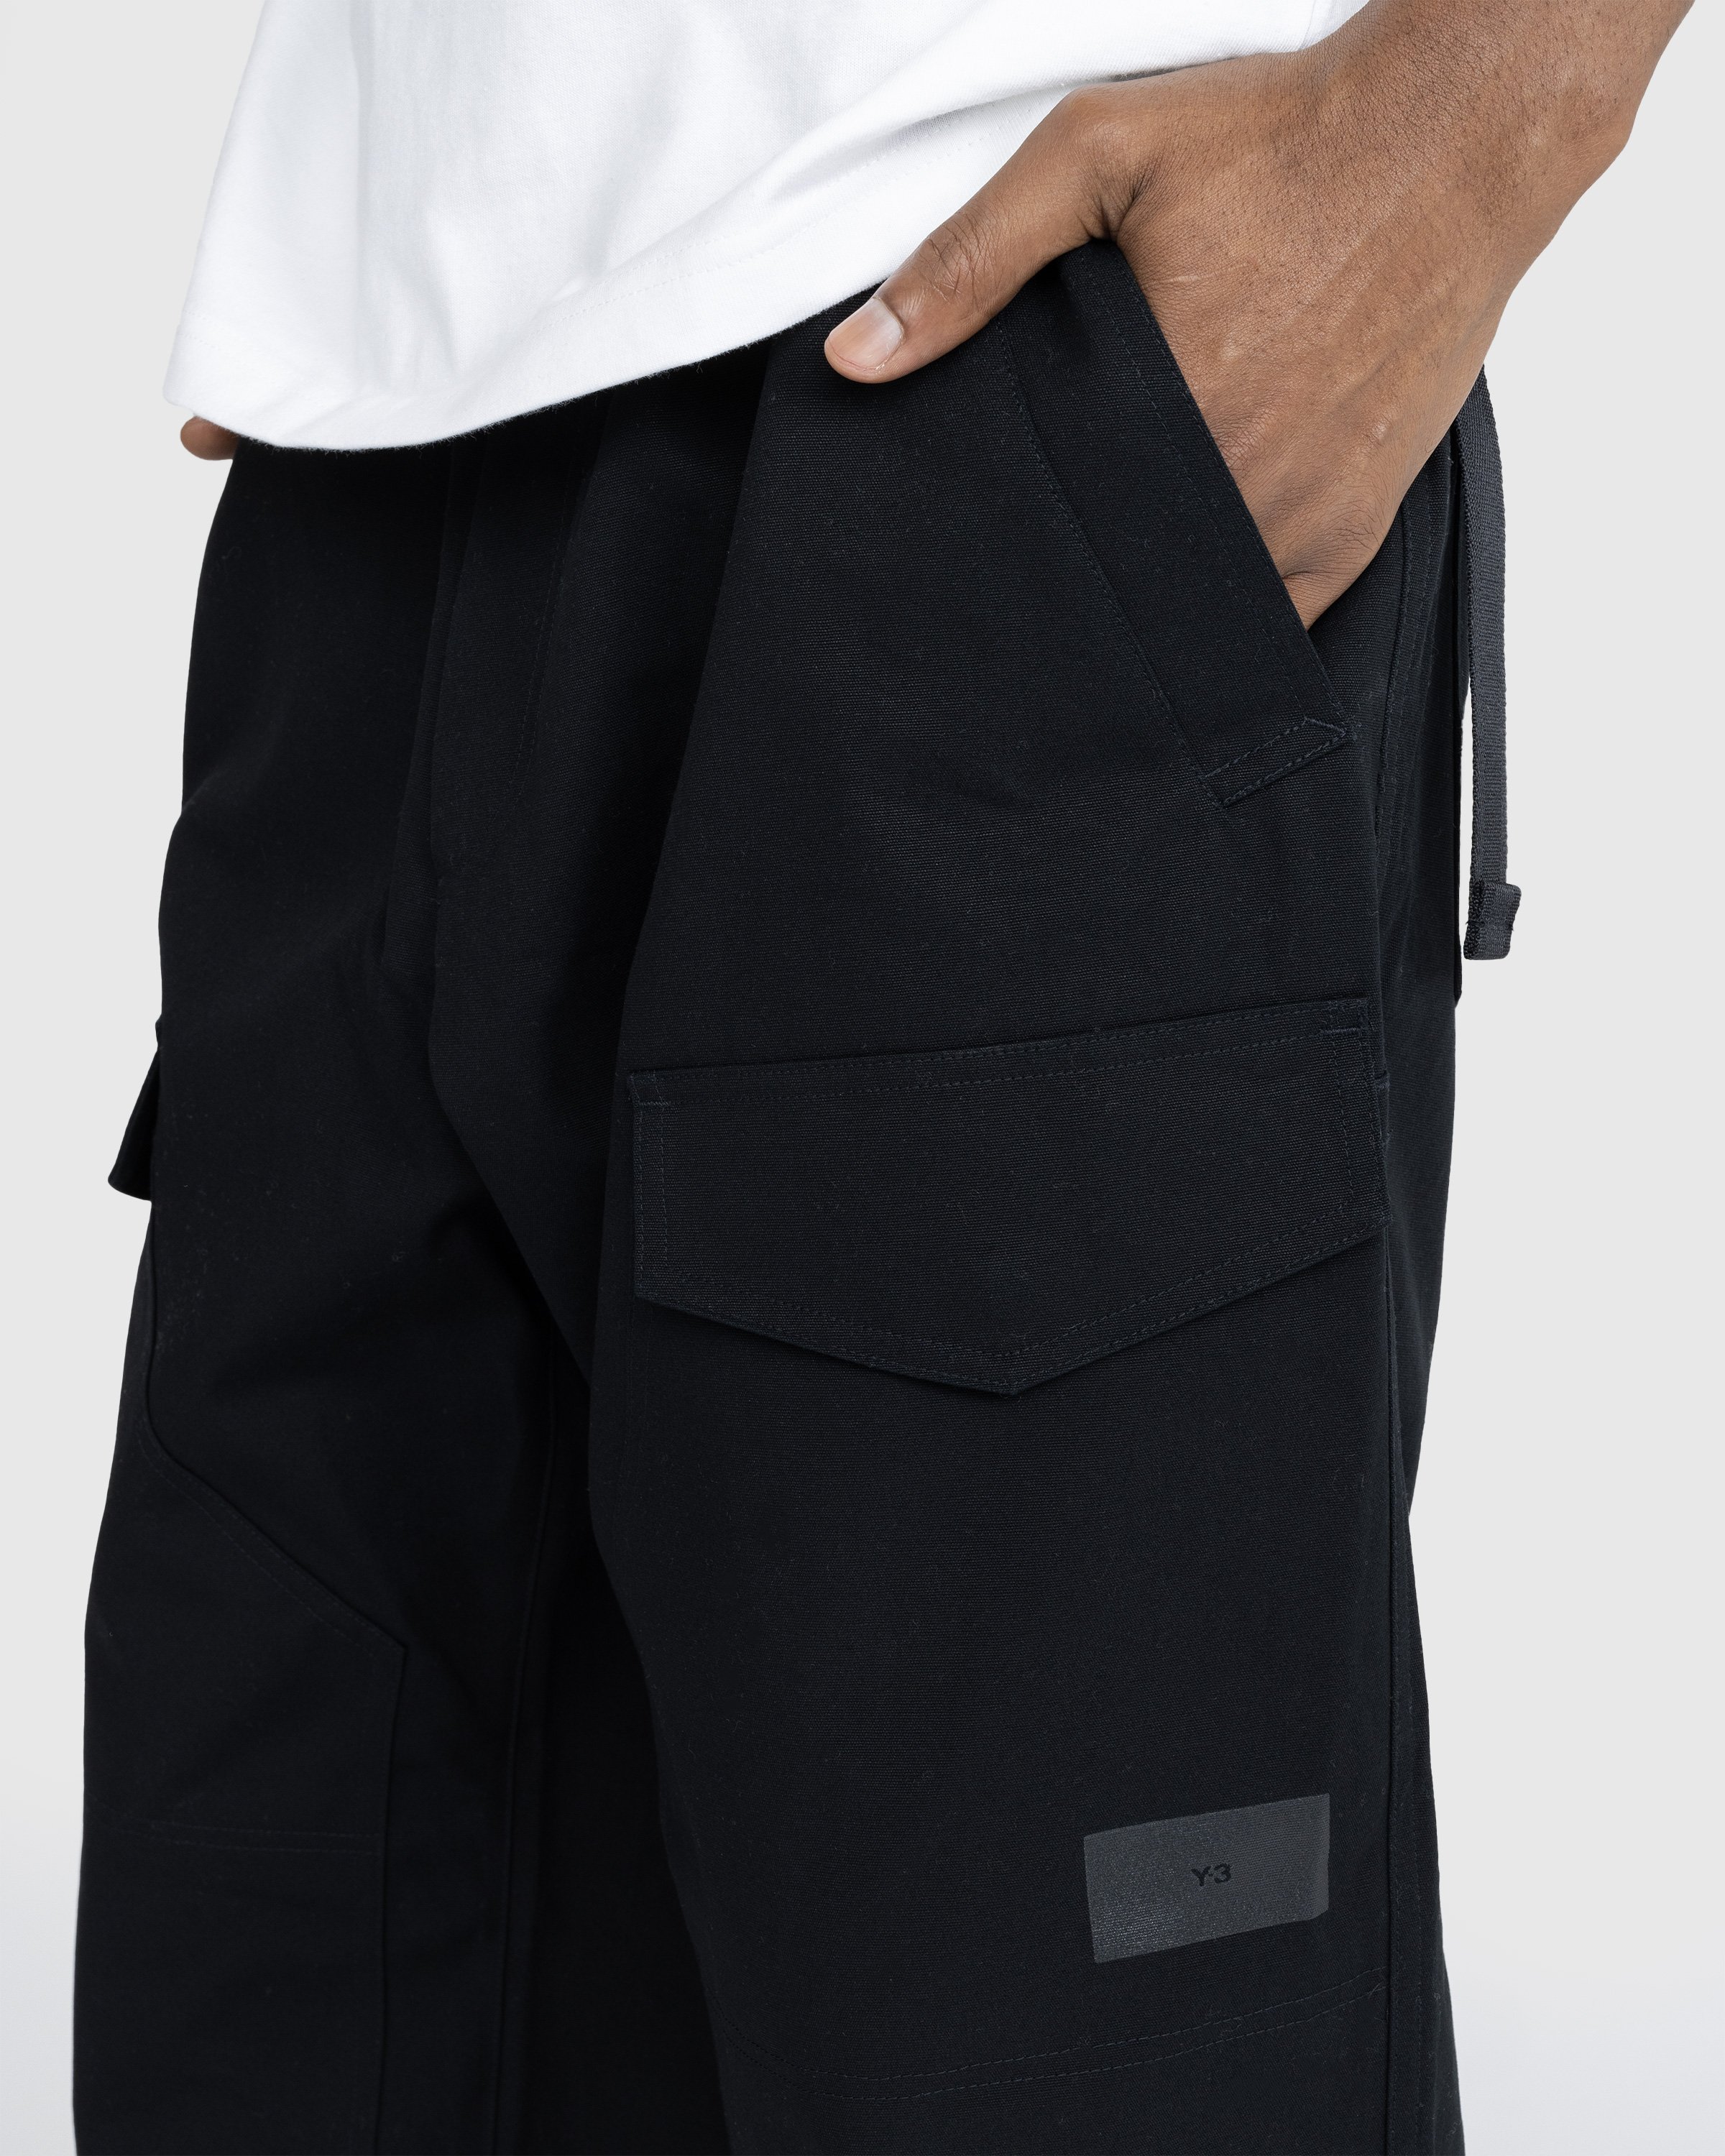 Y-3 - GFX Workwear Pants Black - Clothing - Black - Image 4